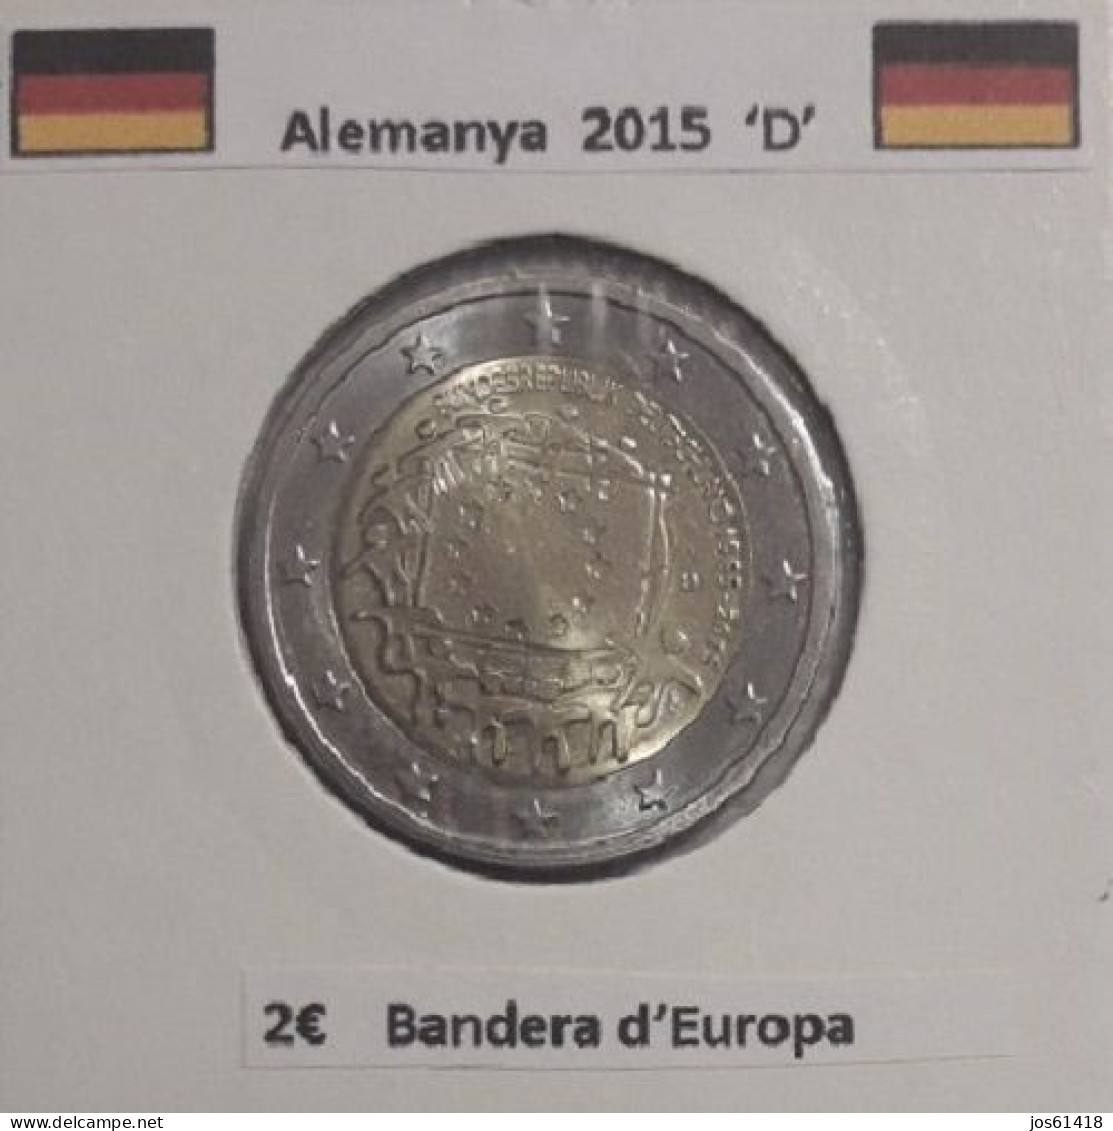 2 Euros Alemania / Germany  2015 30 Jahre Europa Flagge  D O J Sin Circular - Germania